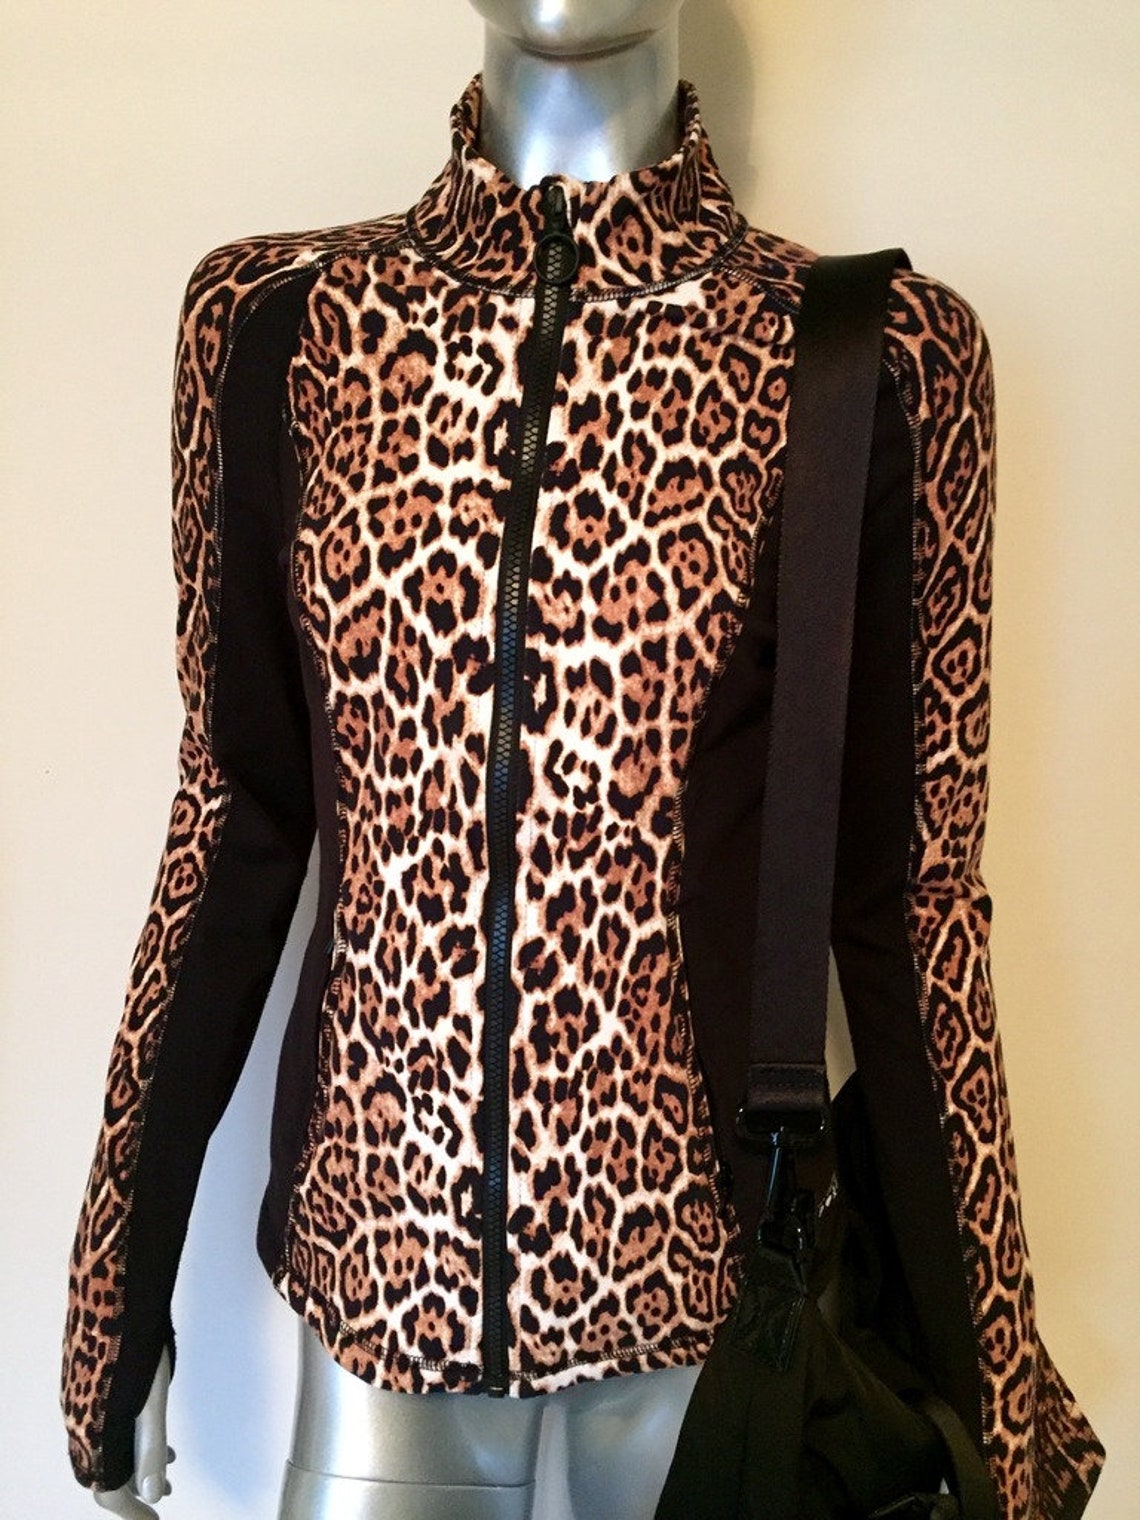 BNWT Juicy Couture Sport cheetah zip up jacket S leopard | Etsy